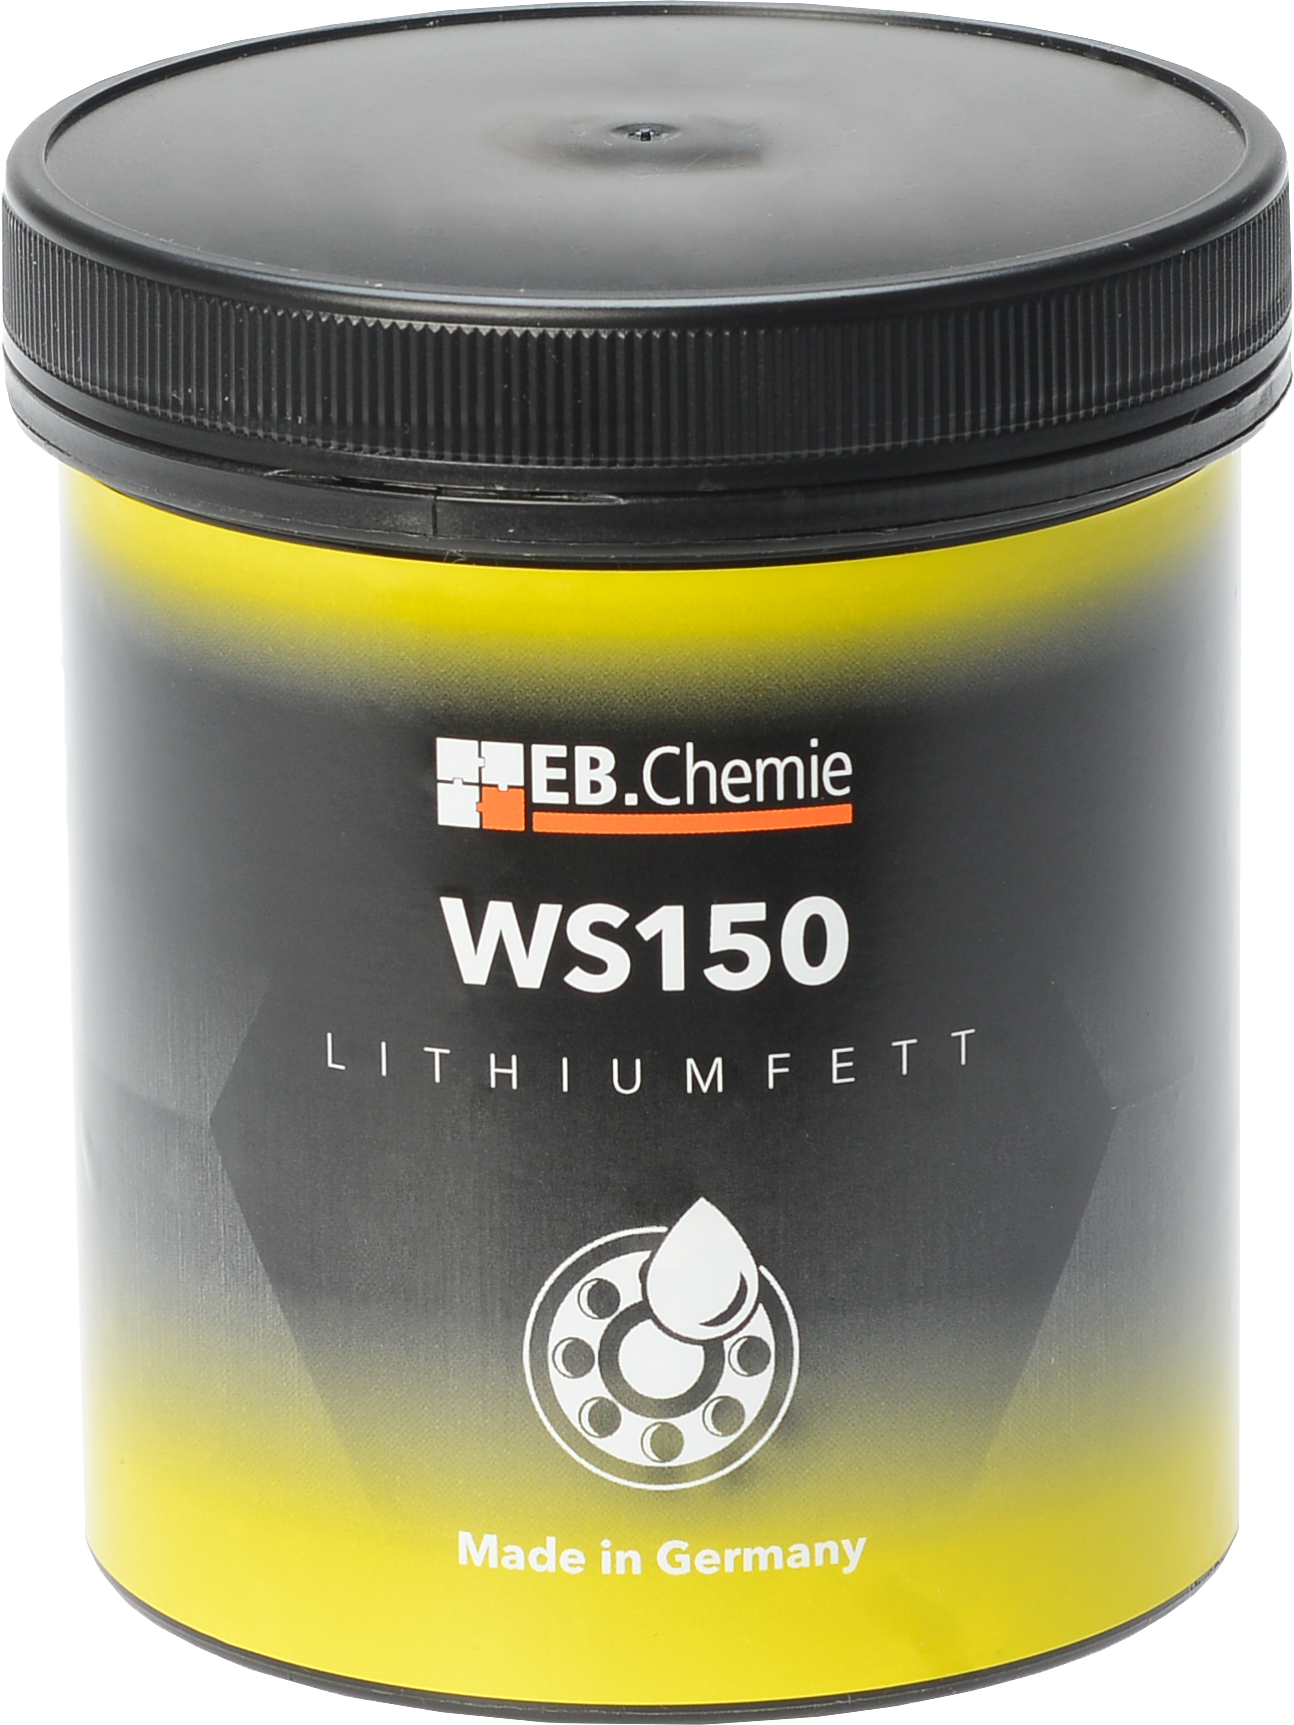 WS150 - Lithiumfett